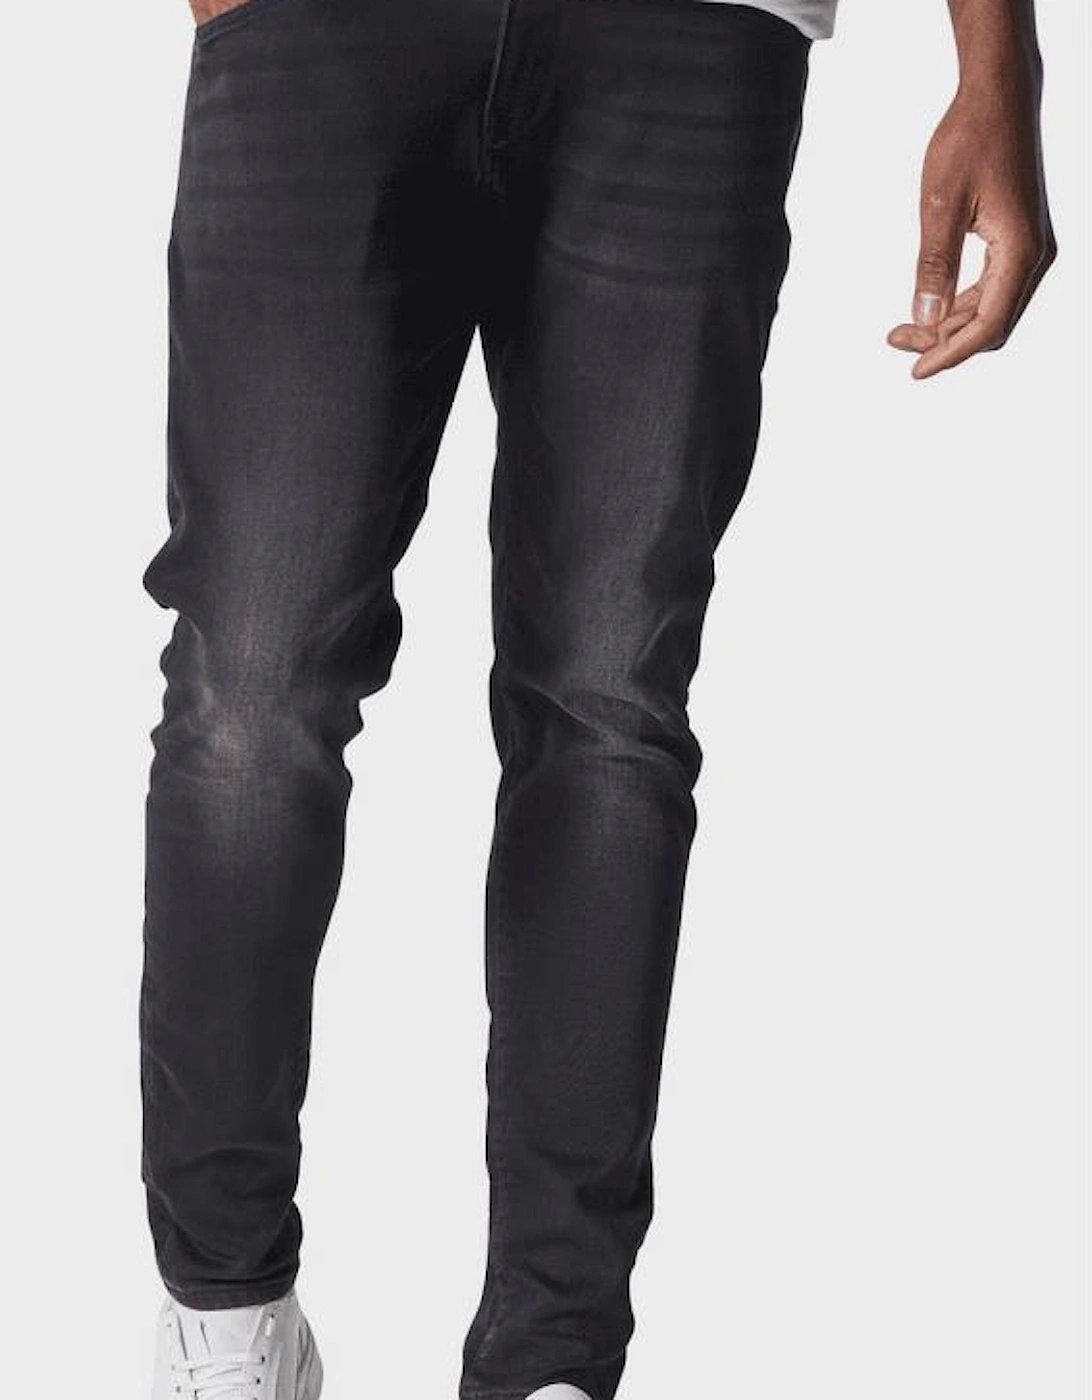 Deniro Slim Fit Active Flex Charcoal Grey Jeans